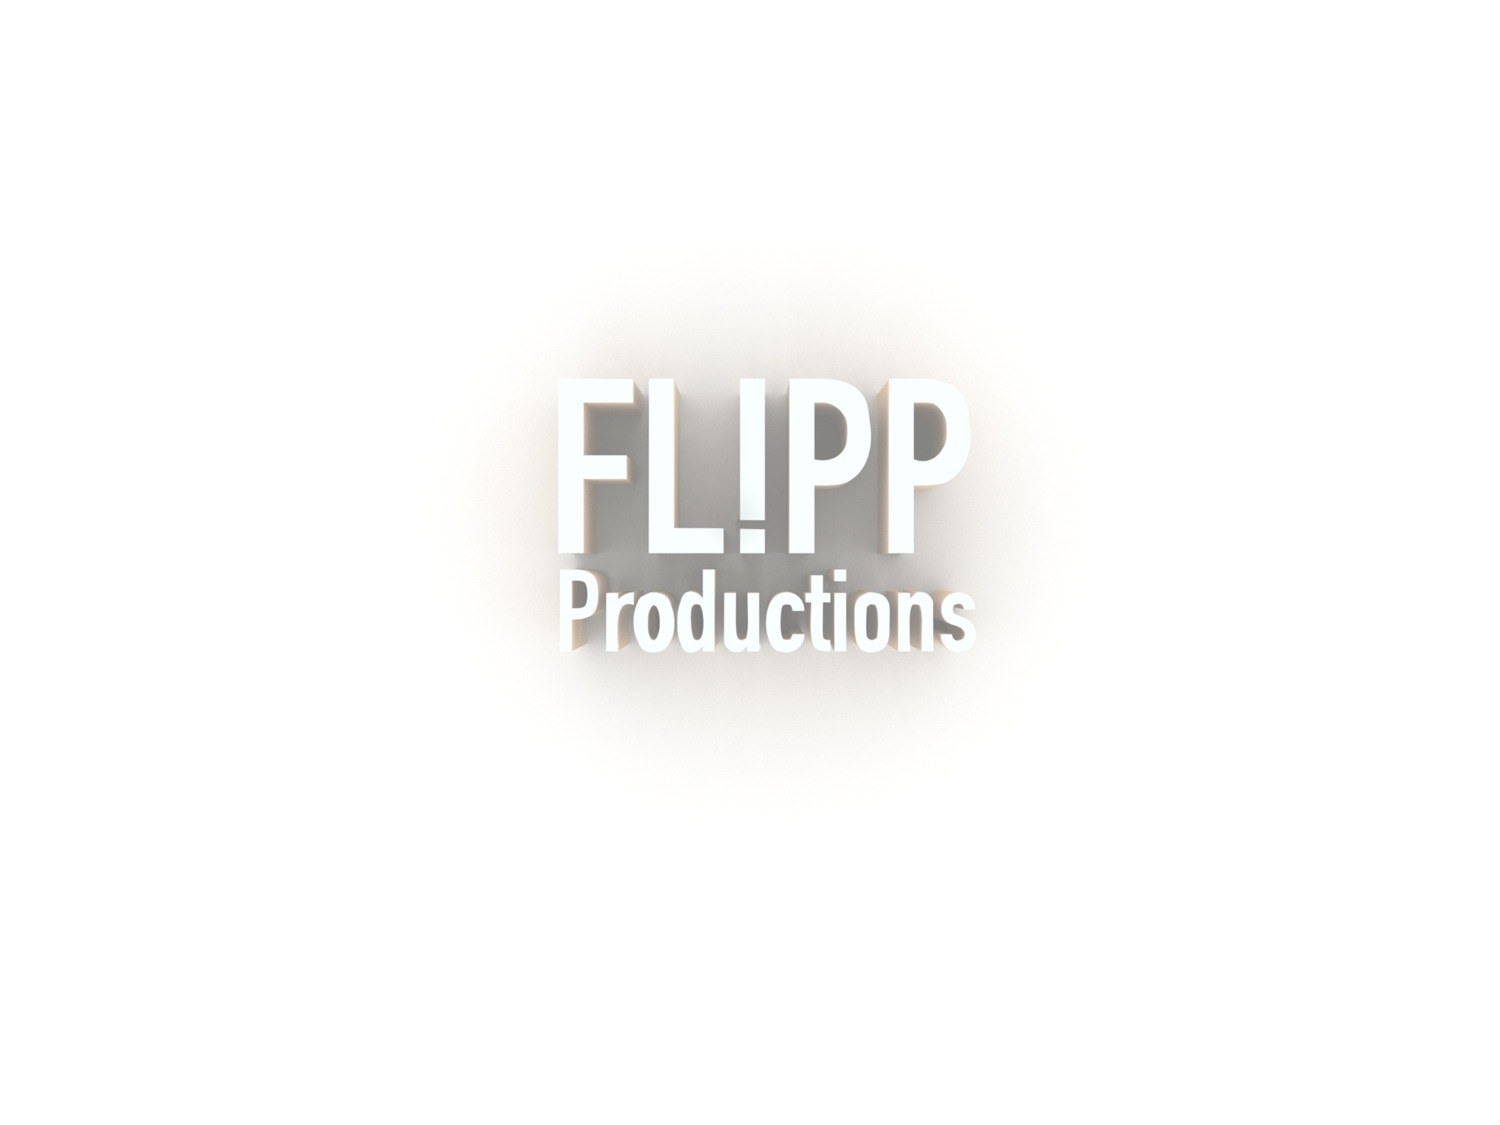 FLIPP Productions